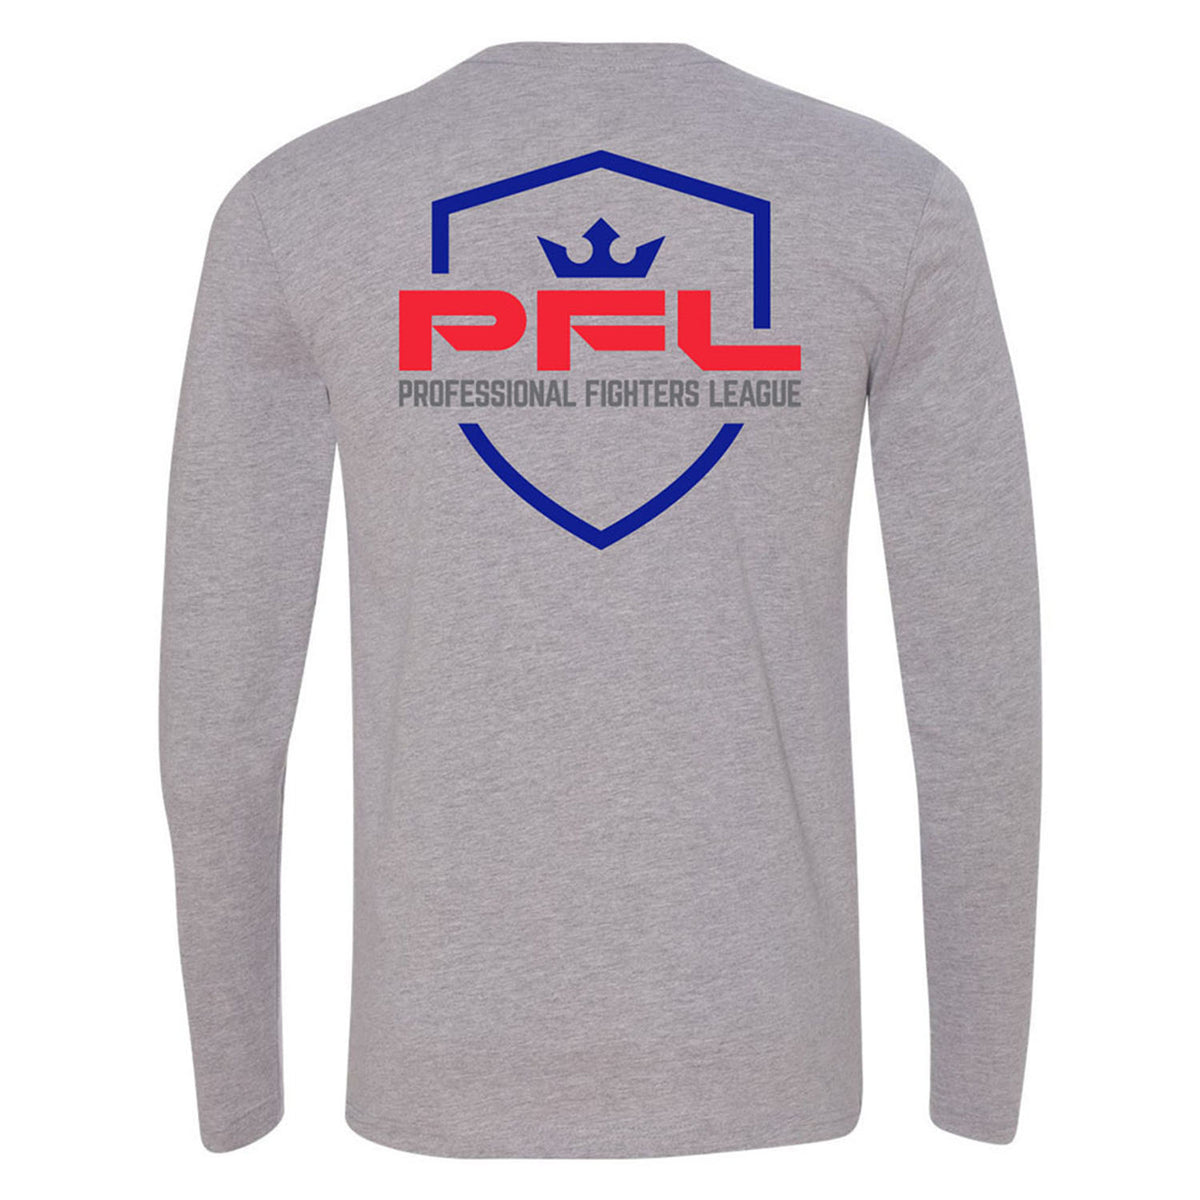 PFL Logo Long-Sleeve T-Shirt in Grey - Back View